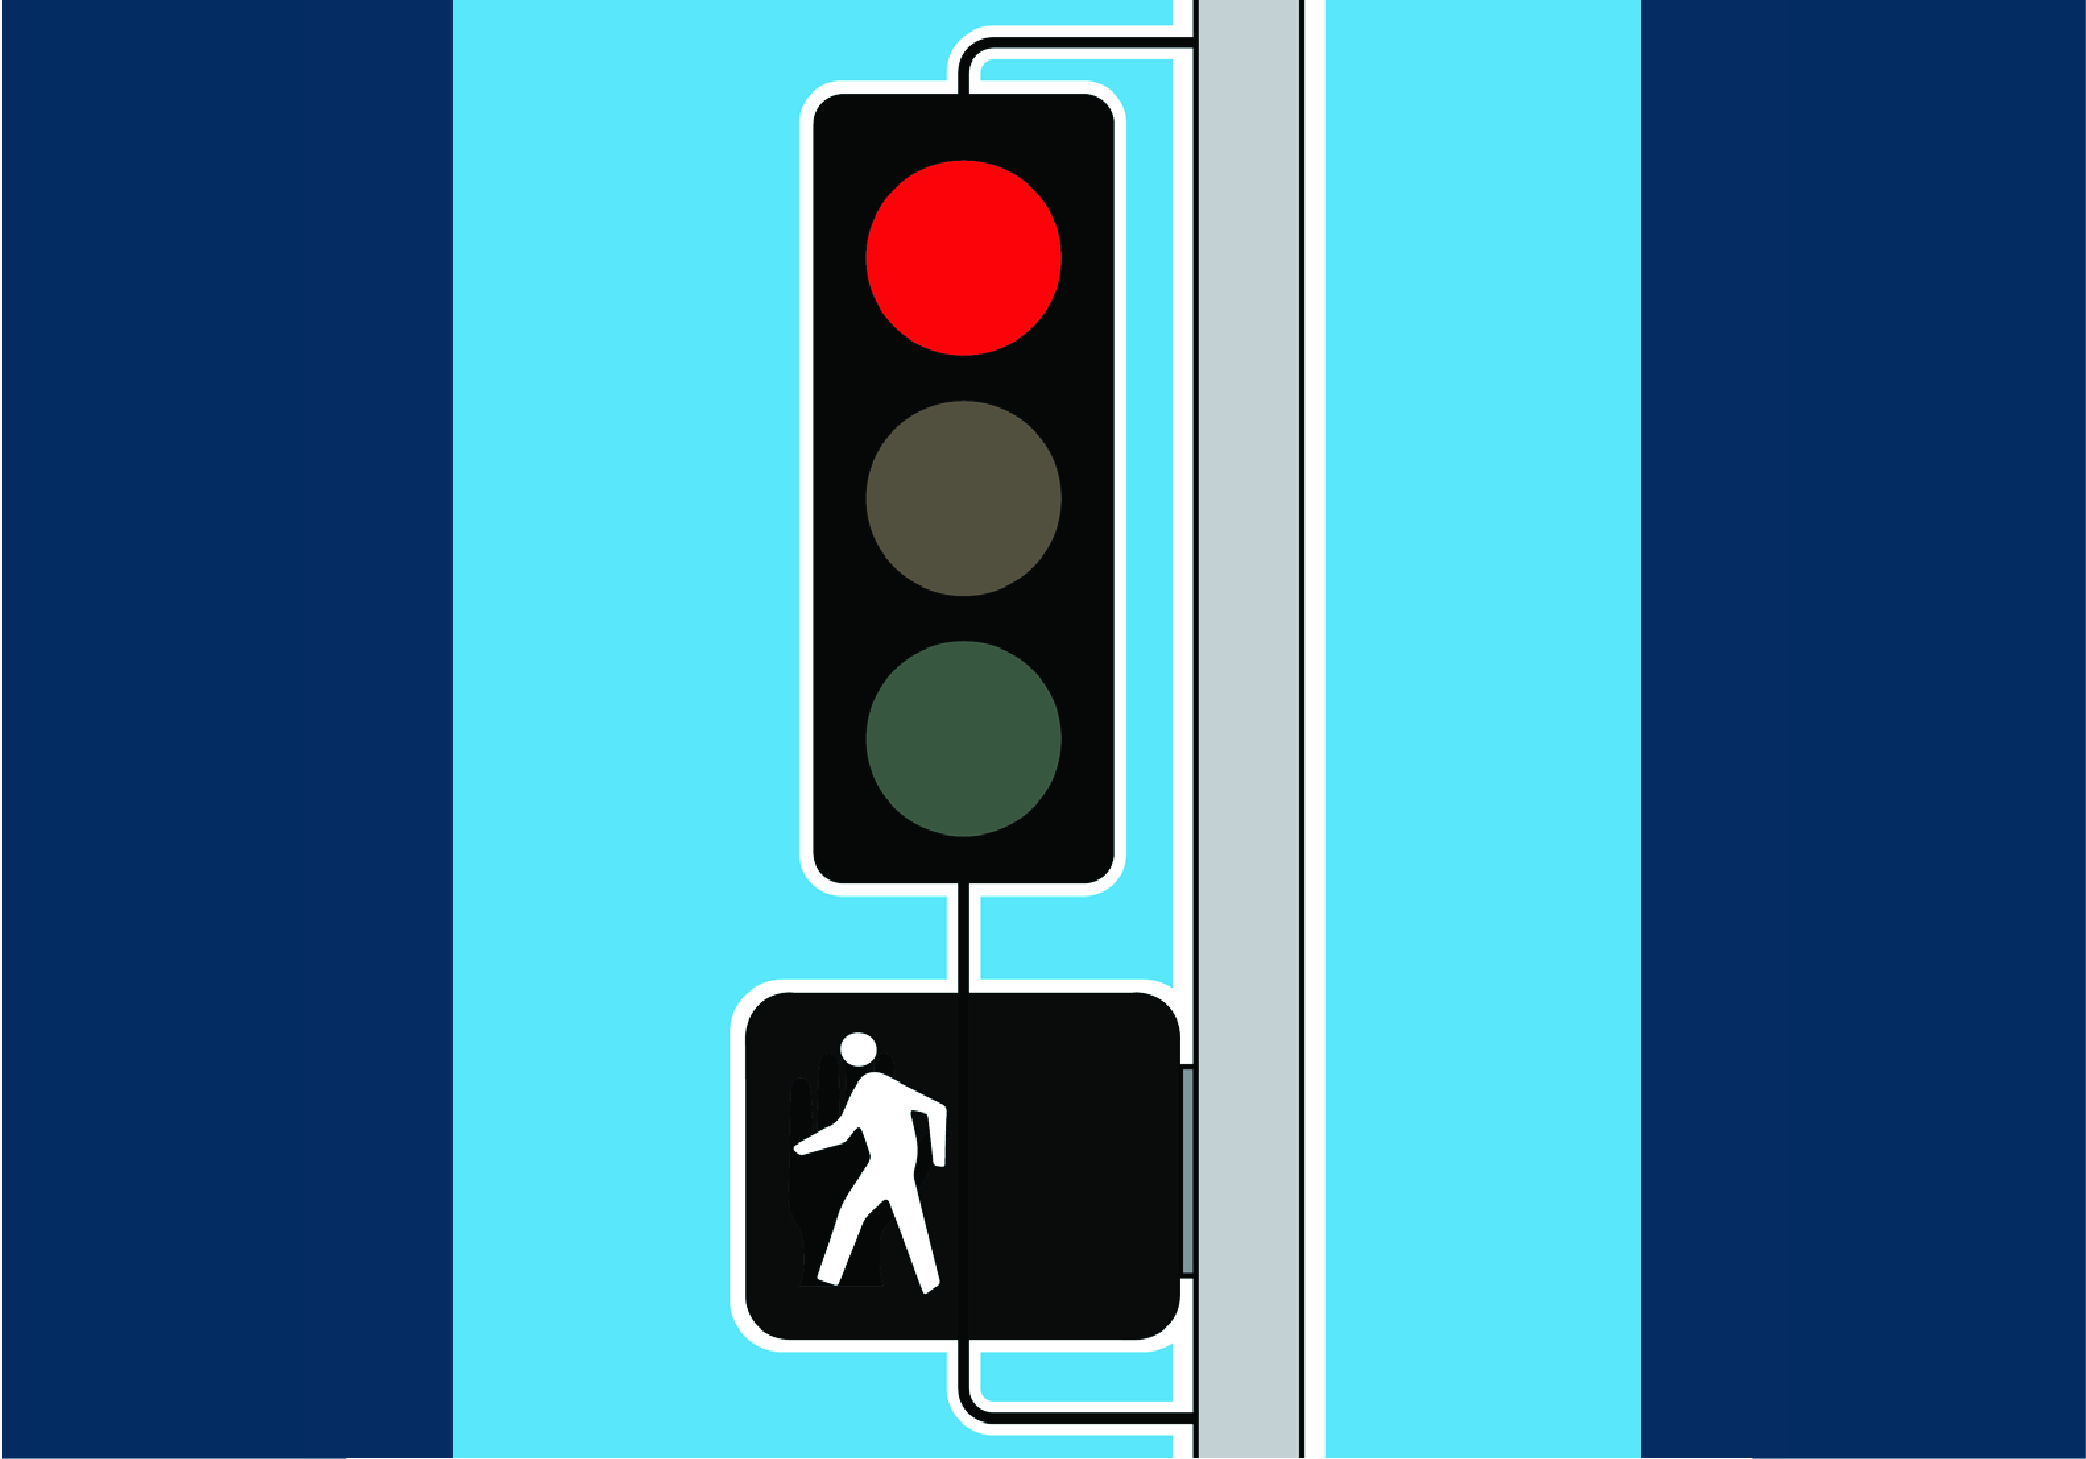 Renderingof traffic signal showing red and pedestrian signal displaying walk signal